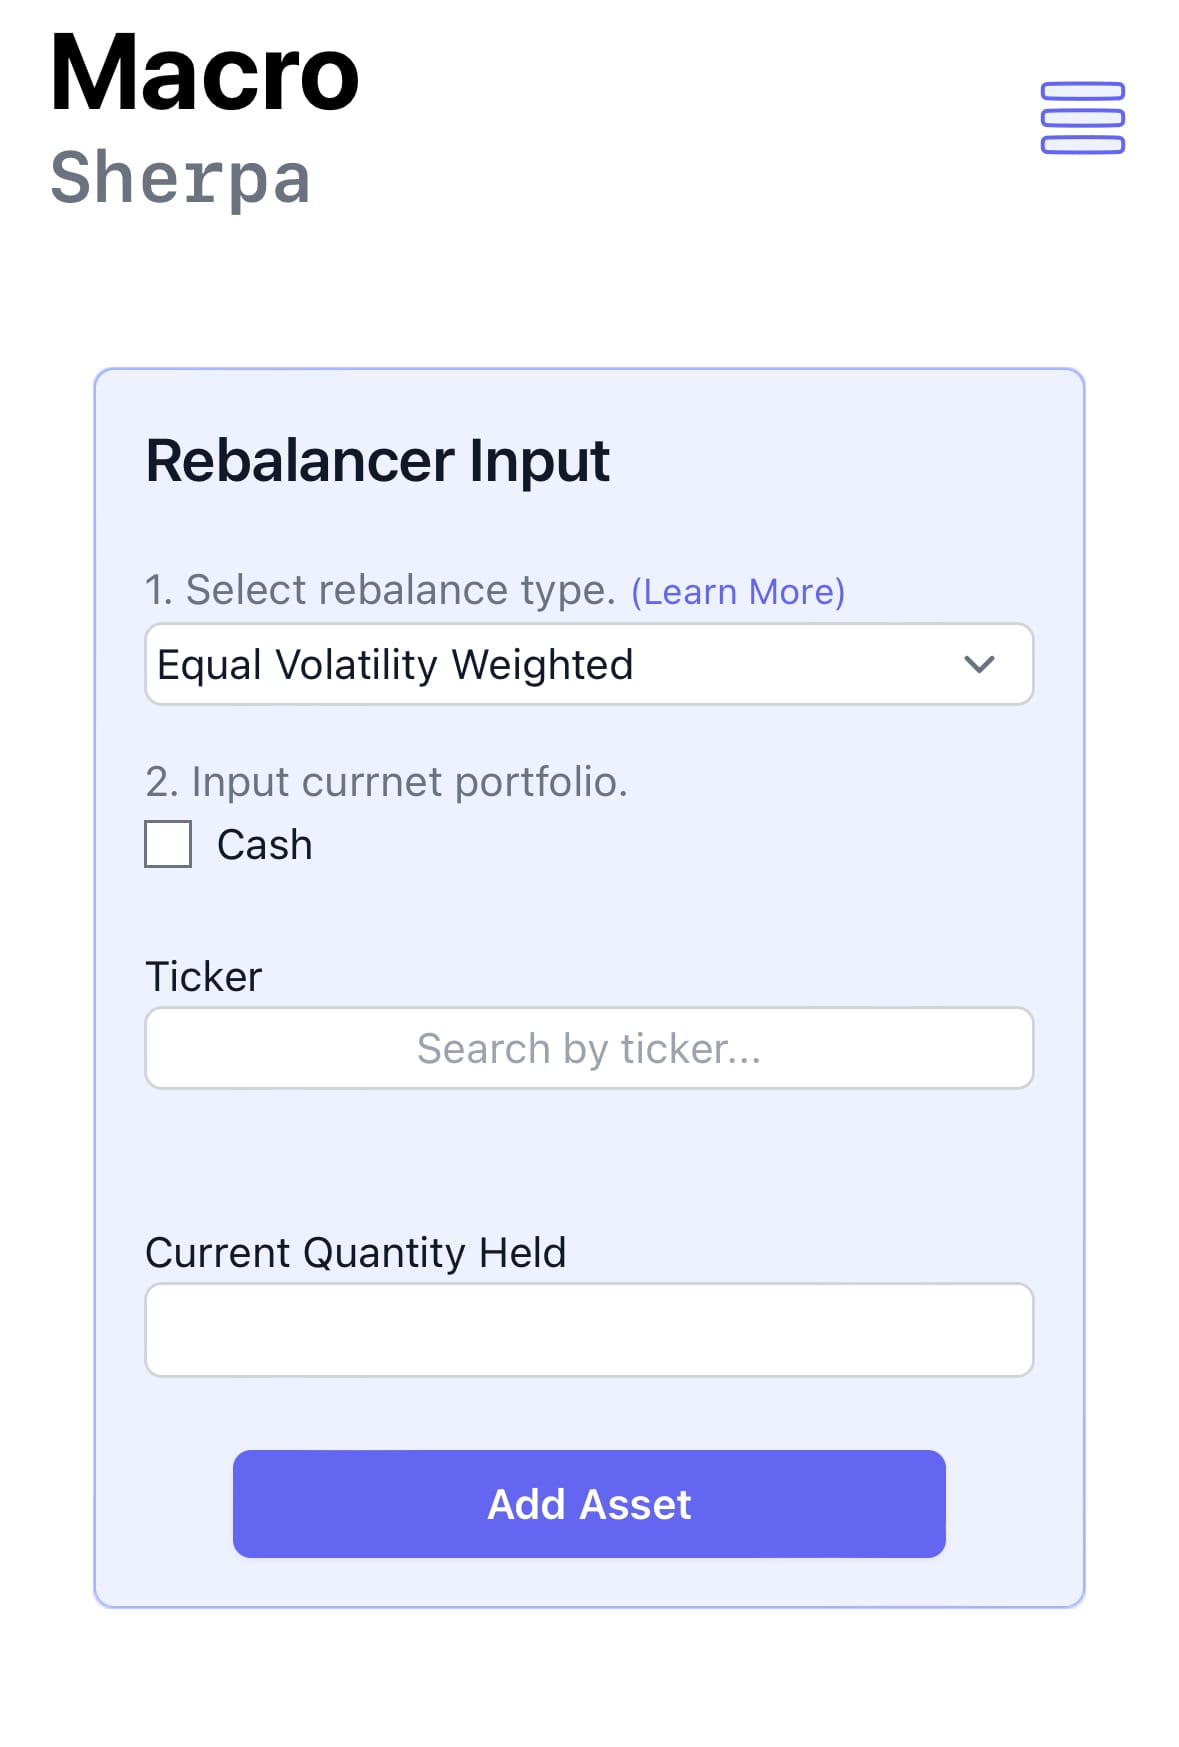 Macro Sherpa mobile portfolio rebalancing calculator main input card.